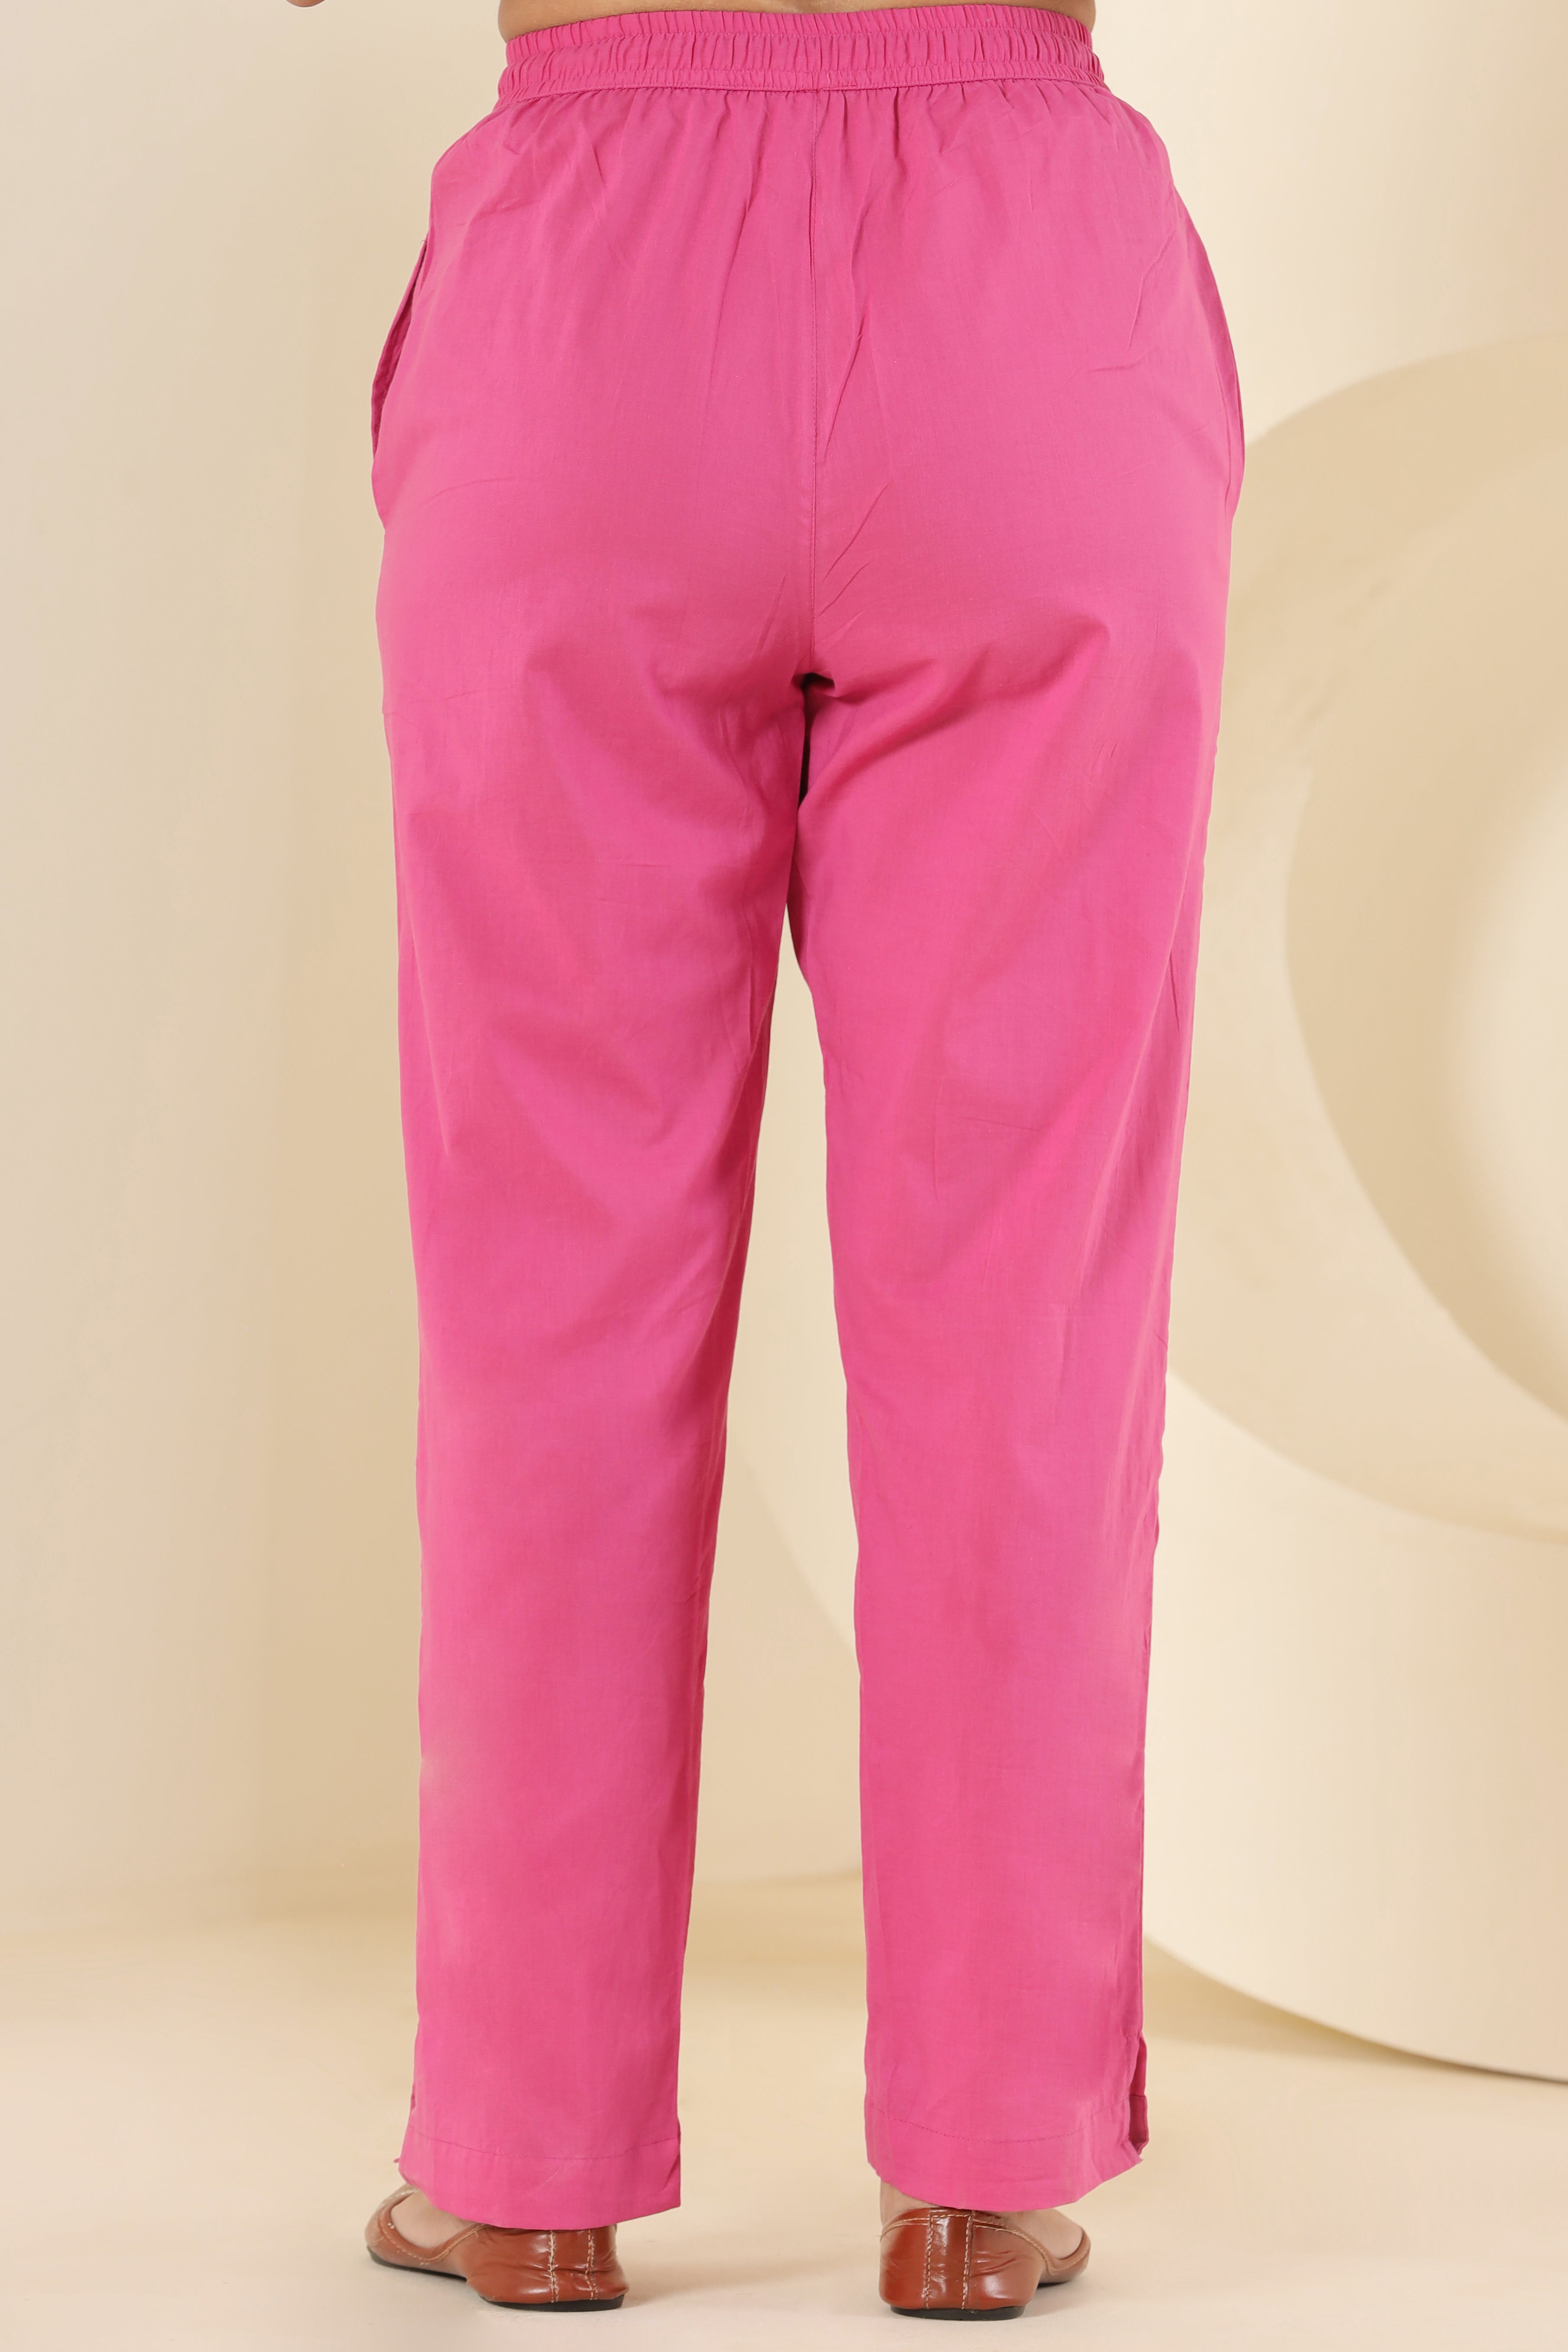 Cupcake Pink Cotton Cambric Lounge Pant